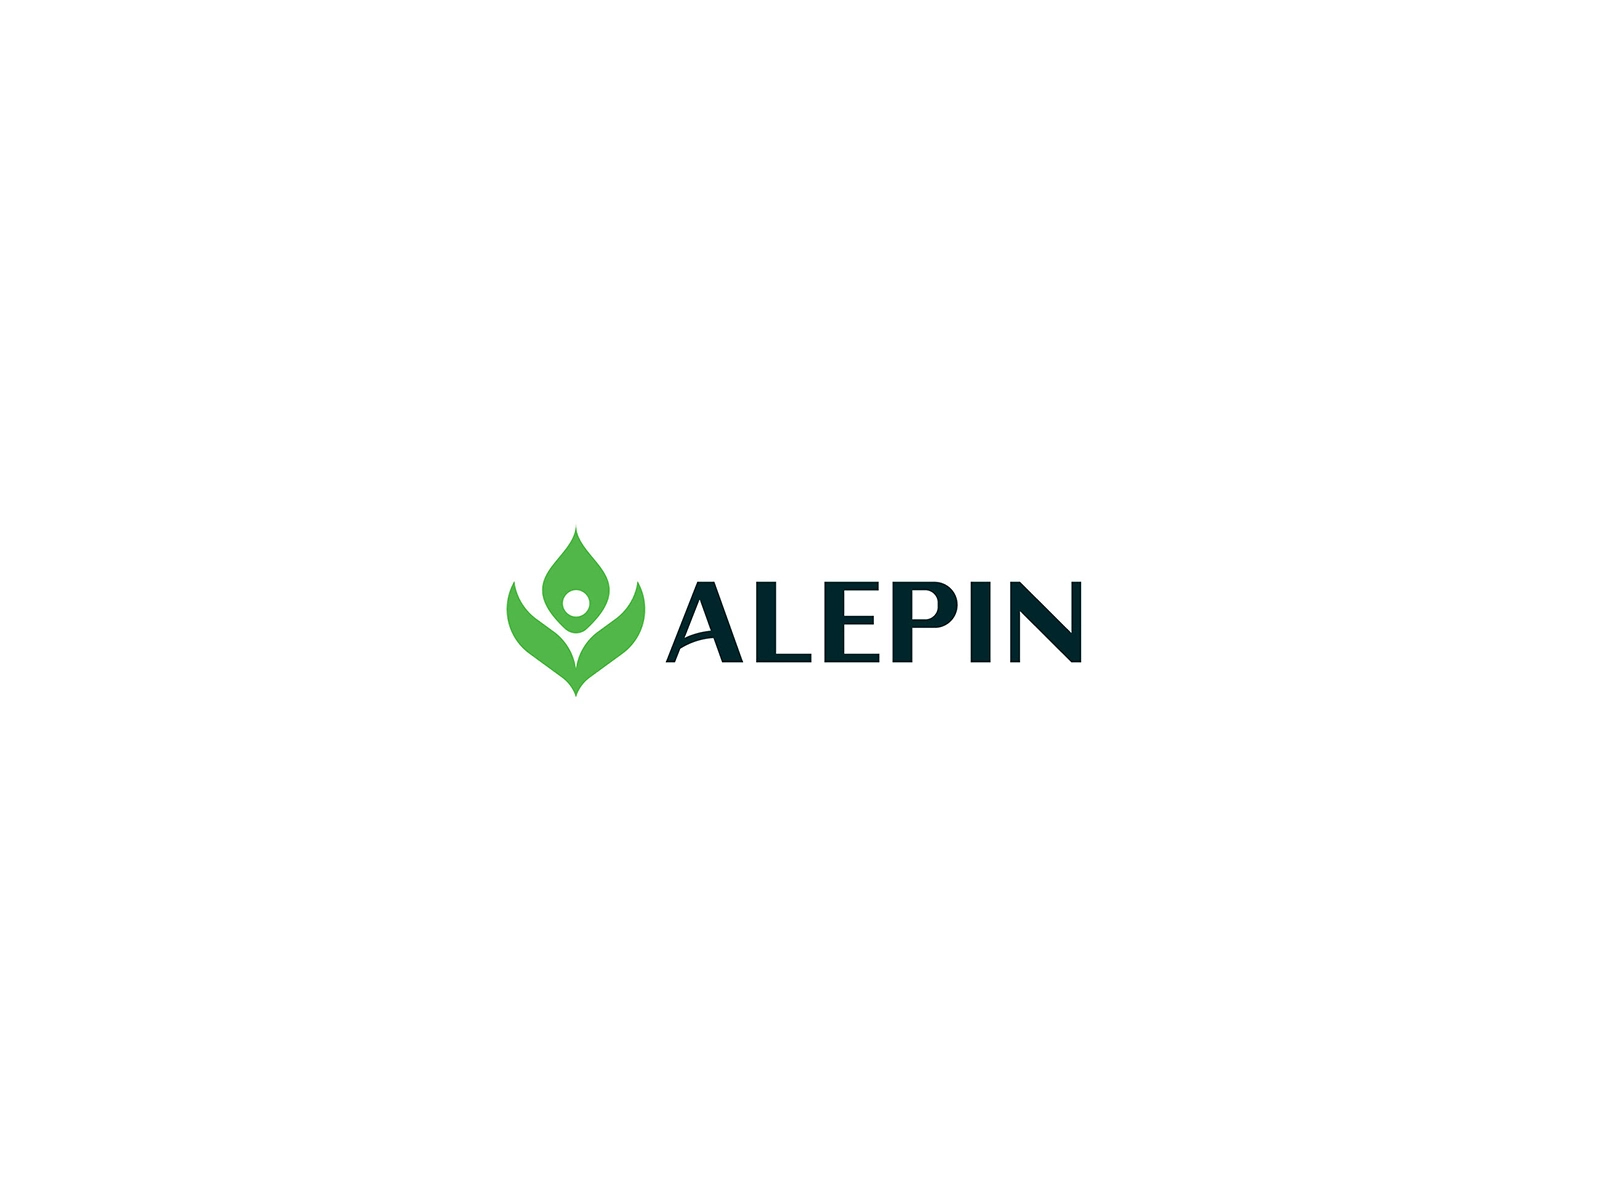 Alepin